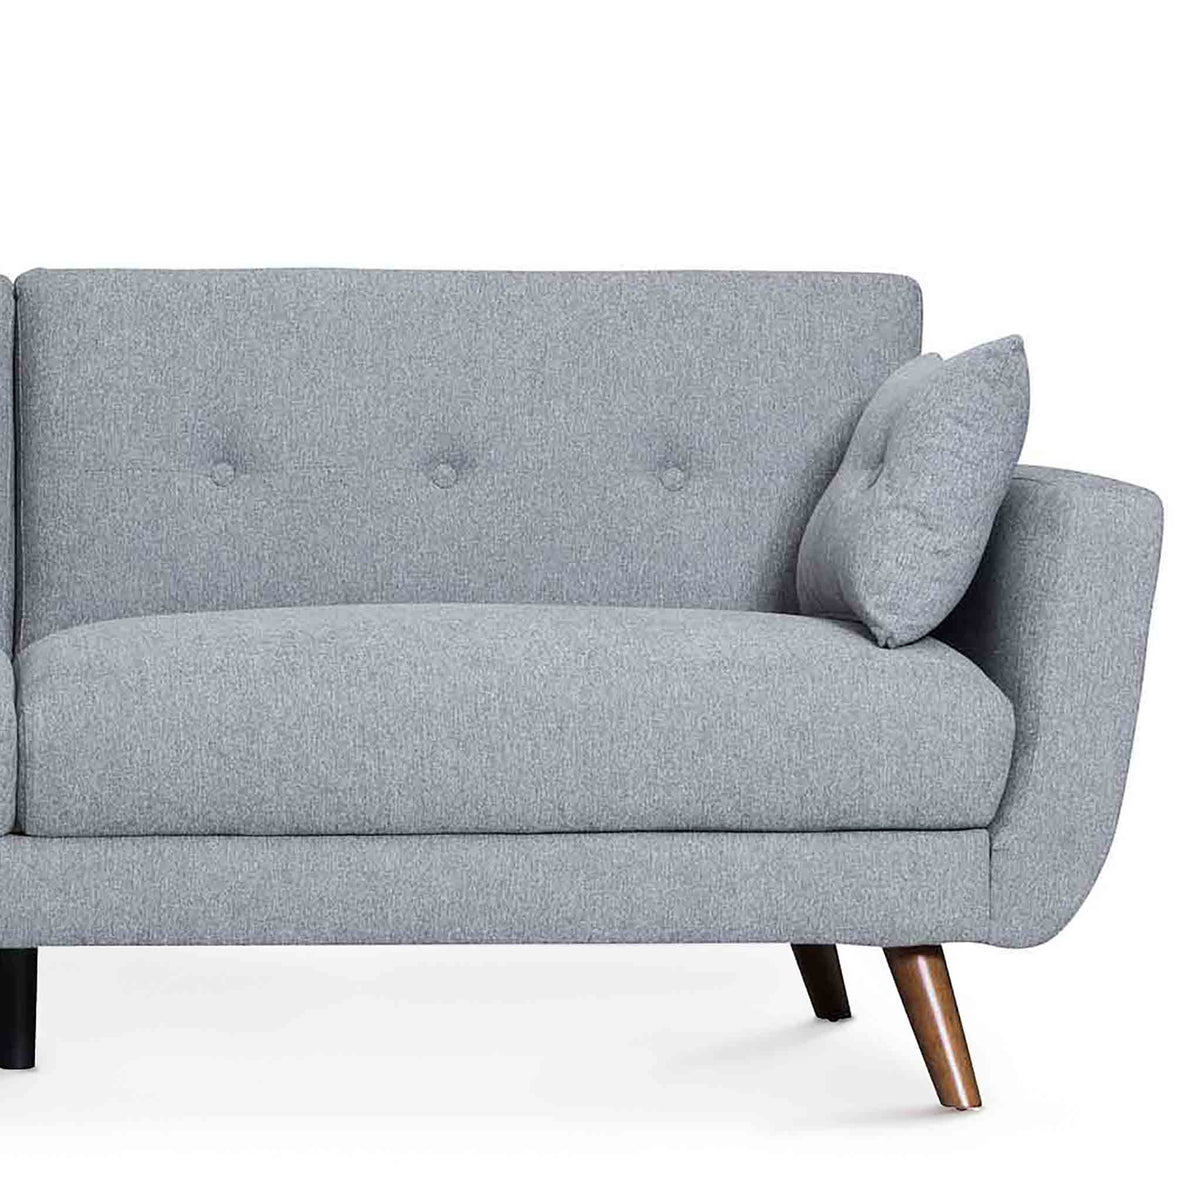 Trom Grey 3 Seater Sofa Bed - Close up of sofa